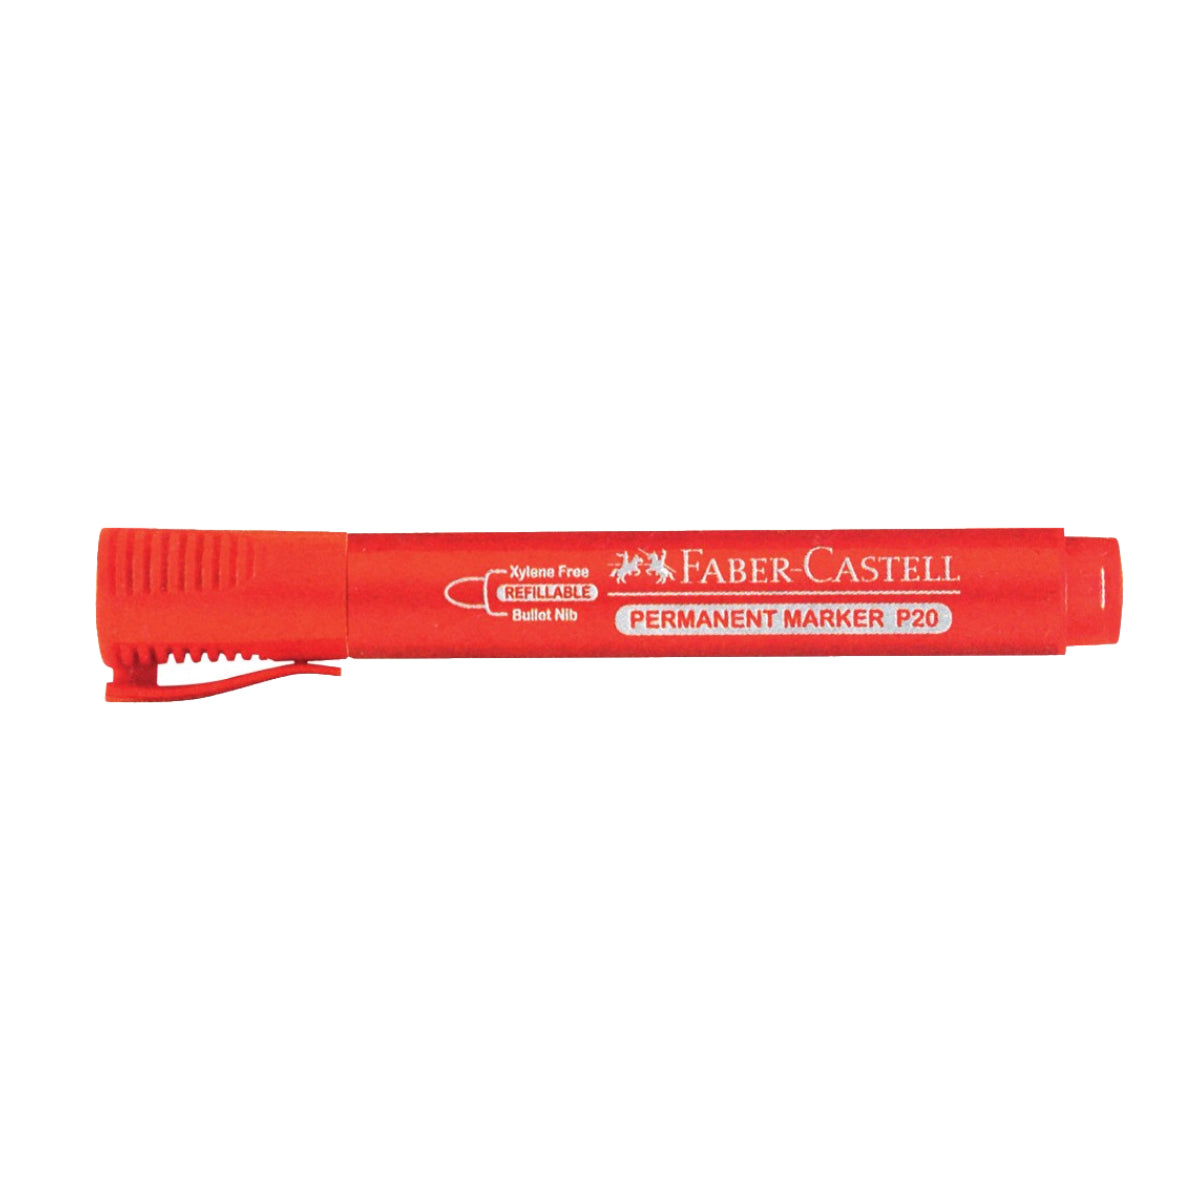 Faber Castell Permanent Marker P20, Bullet Tip, Red